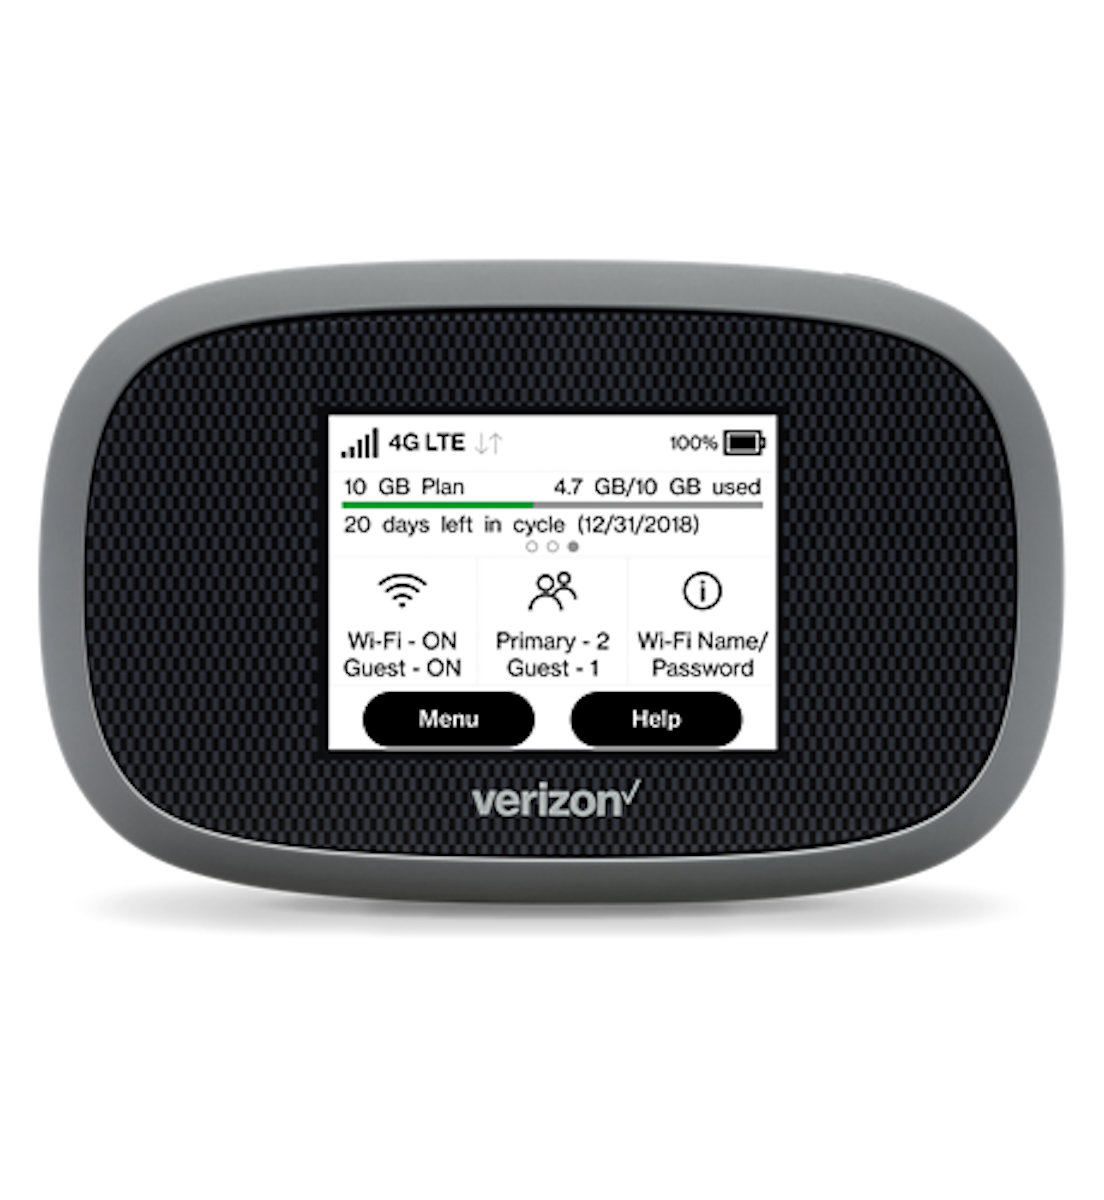 Verizon Jetpack 4G LTE Mobile Hotspot AC791L - Support Overview